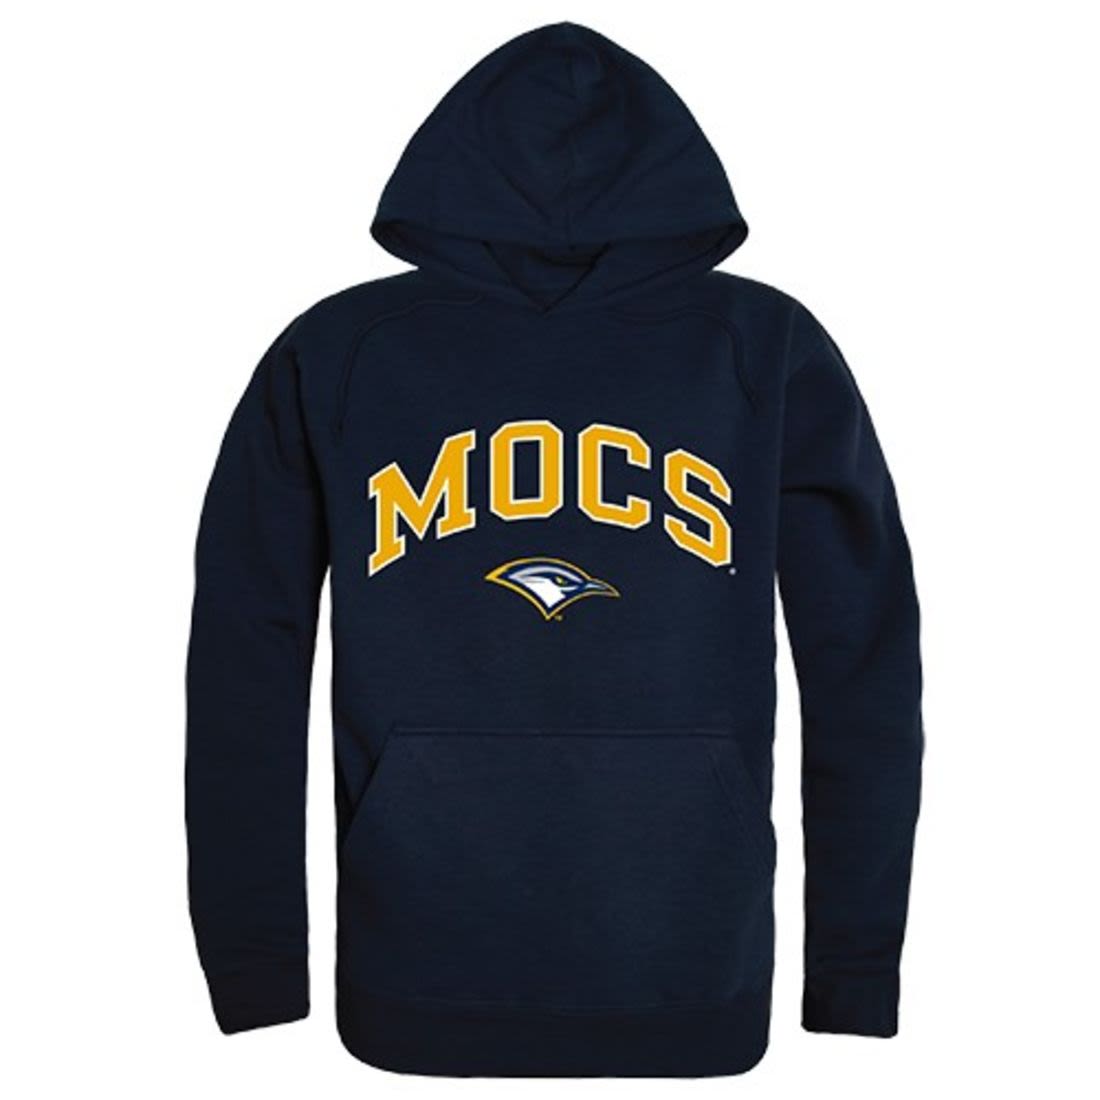 University of Tennessee at Chattanooga (UTC) MOCS Campus Hoodie Sweatshirt Navy-Campus-Wardrobe